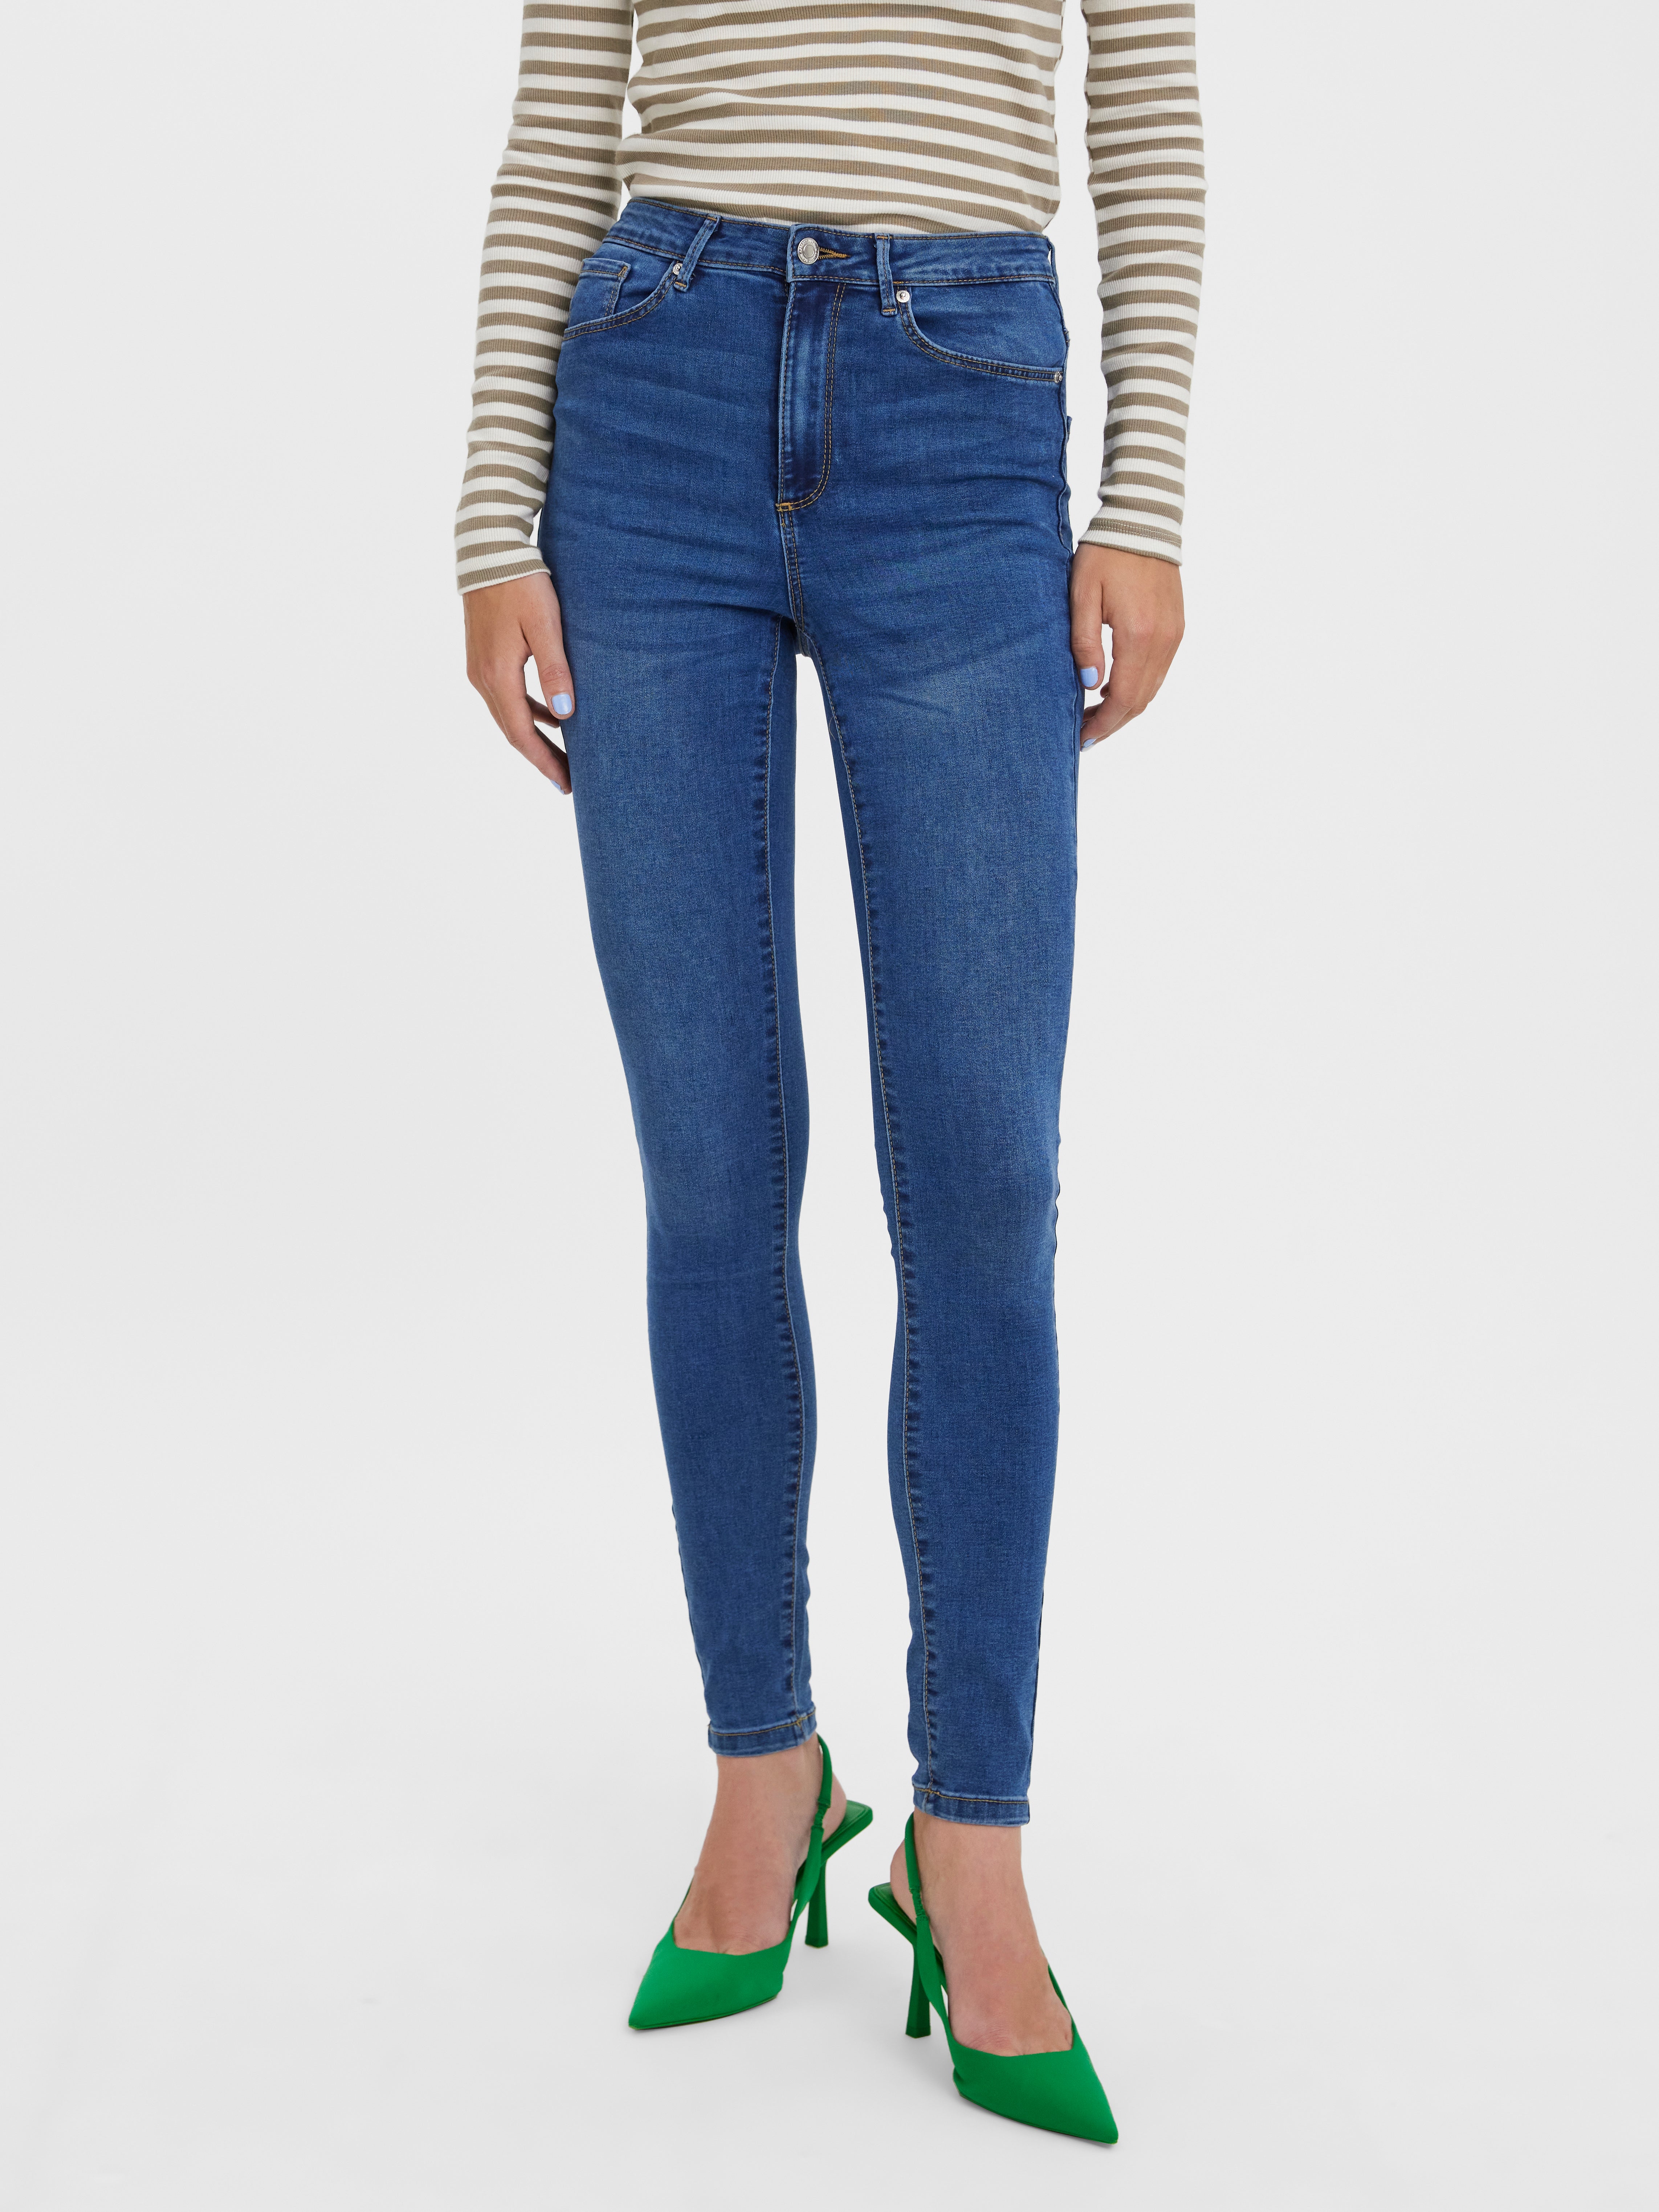 Vero Moda shorts jeans discount 80% WOMEN FASHION Jeans Embroidery Blue XS 